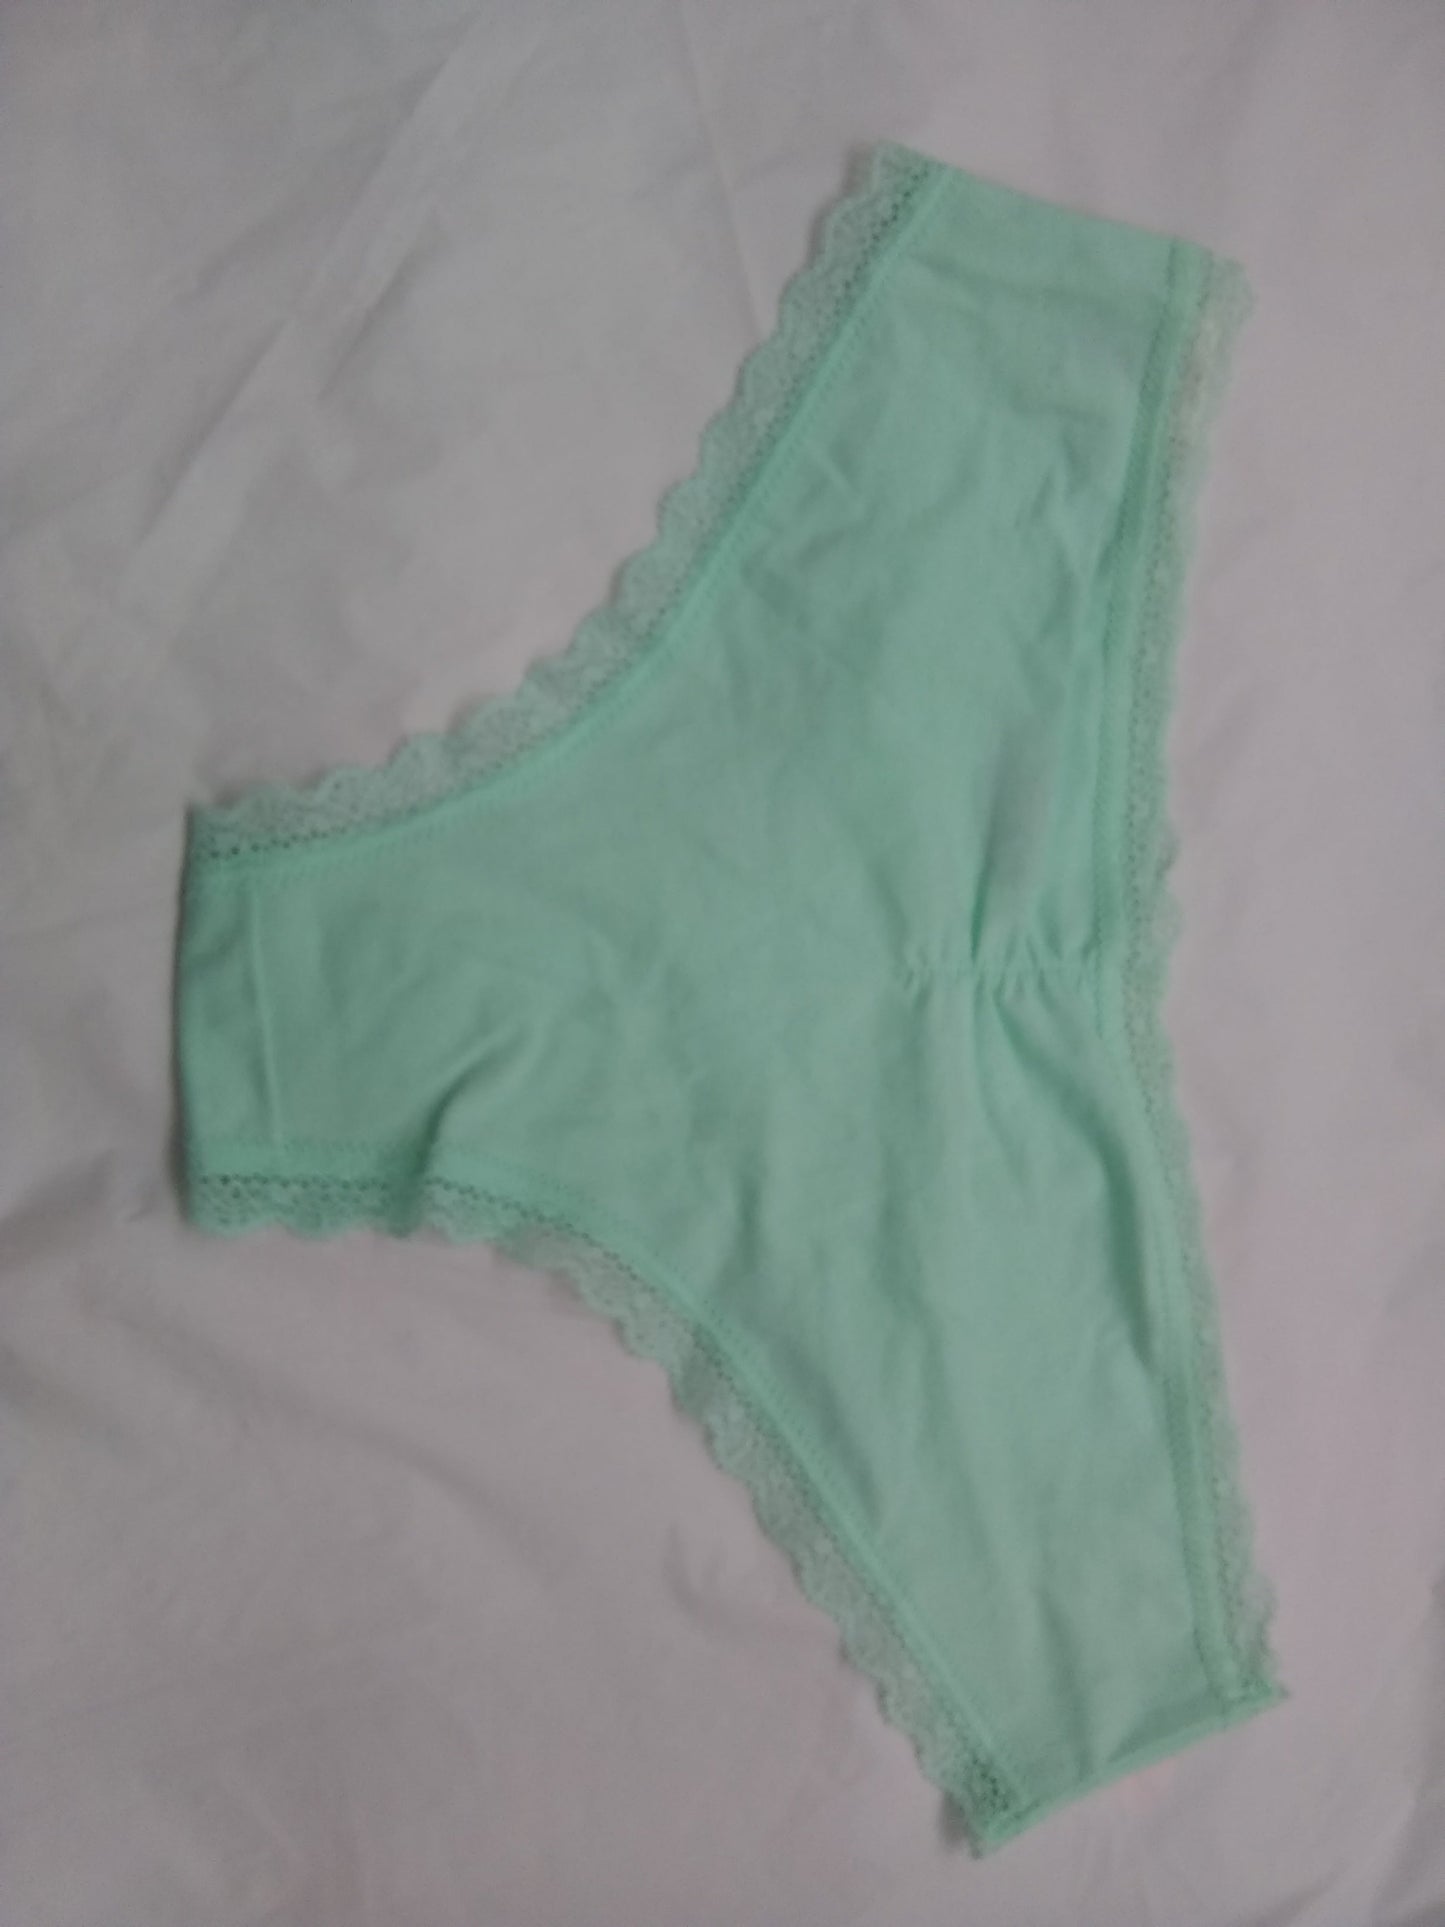 Xilaration Women Cotton Cheeky Bikini Cut Underwear, Green,  Size Large (11-13)